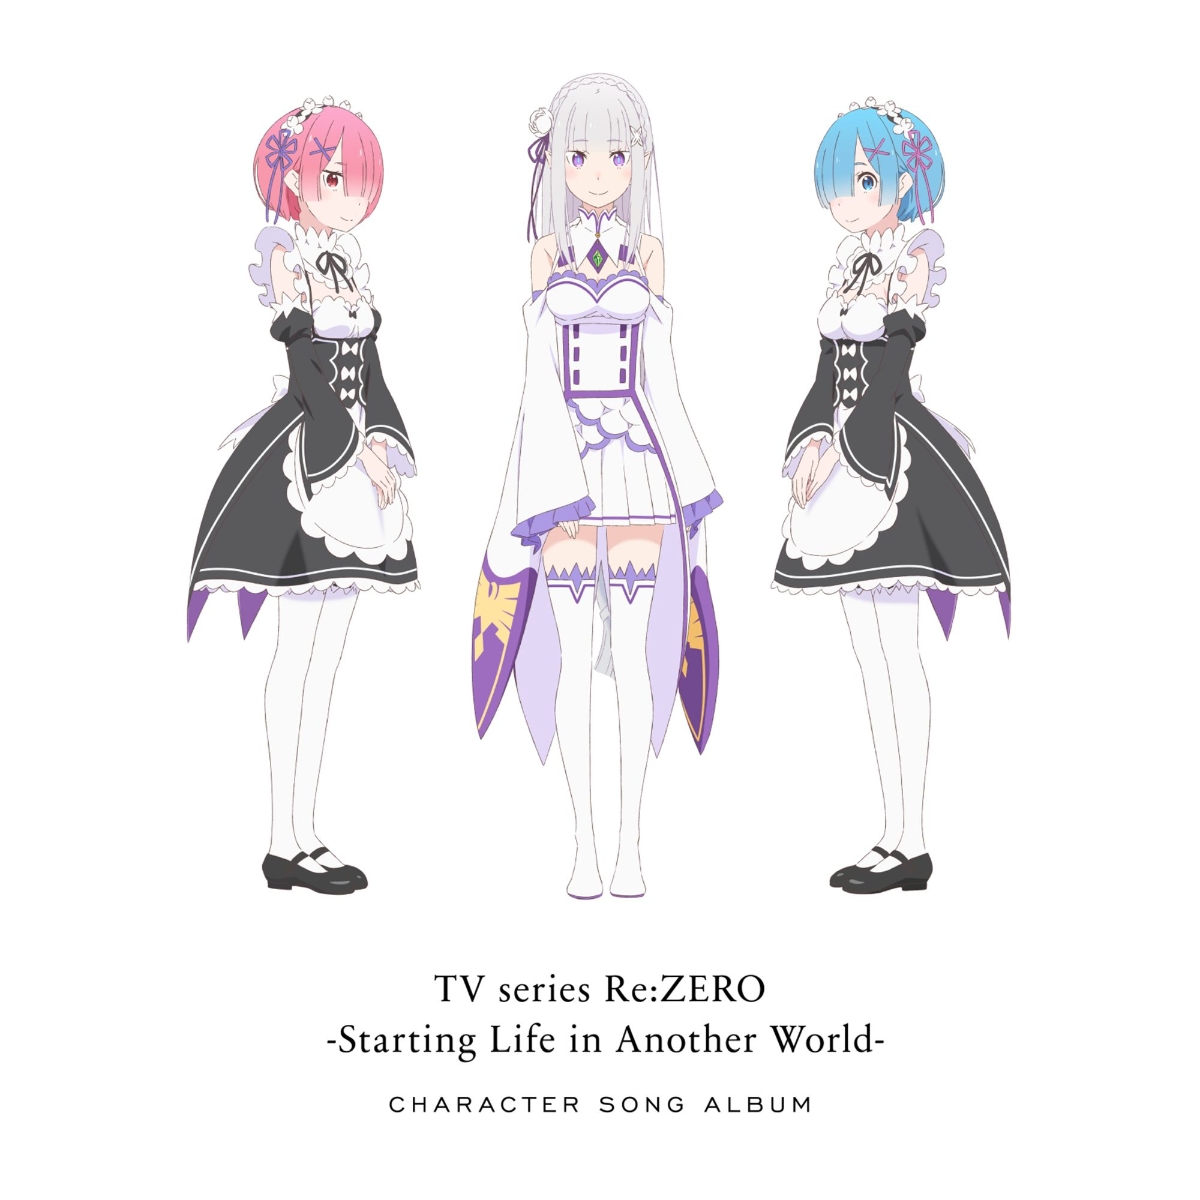 TVアニメ「Re:ゼロから始める異世界生活」キャラクターソングアルバム画像